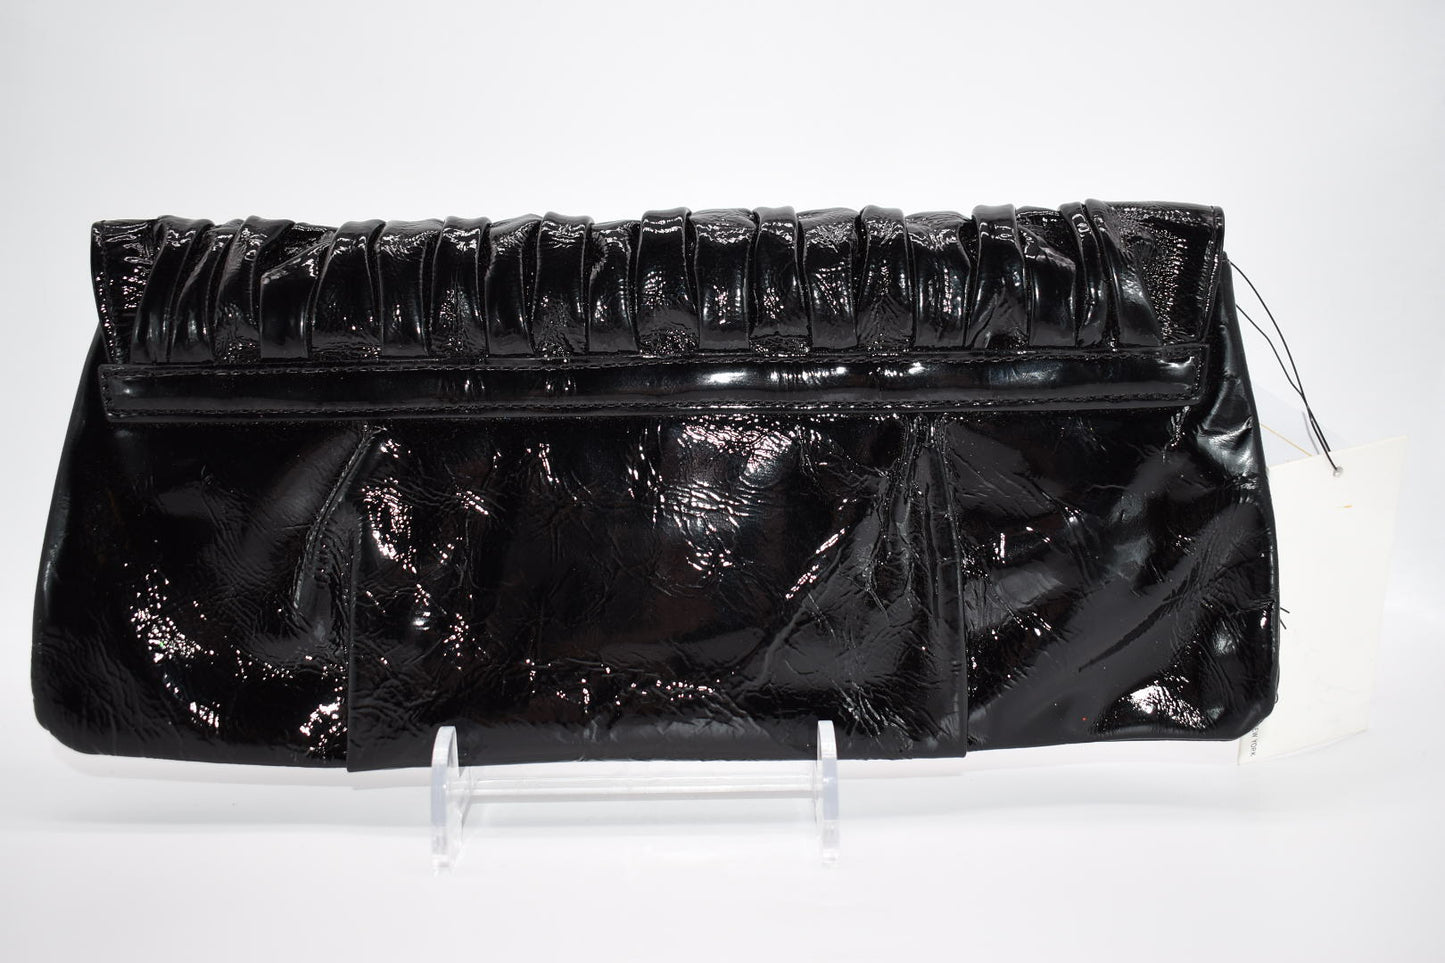 Kenneth Cole Black Leather Clutch Bag